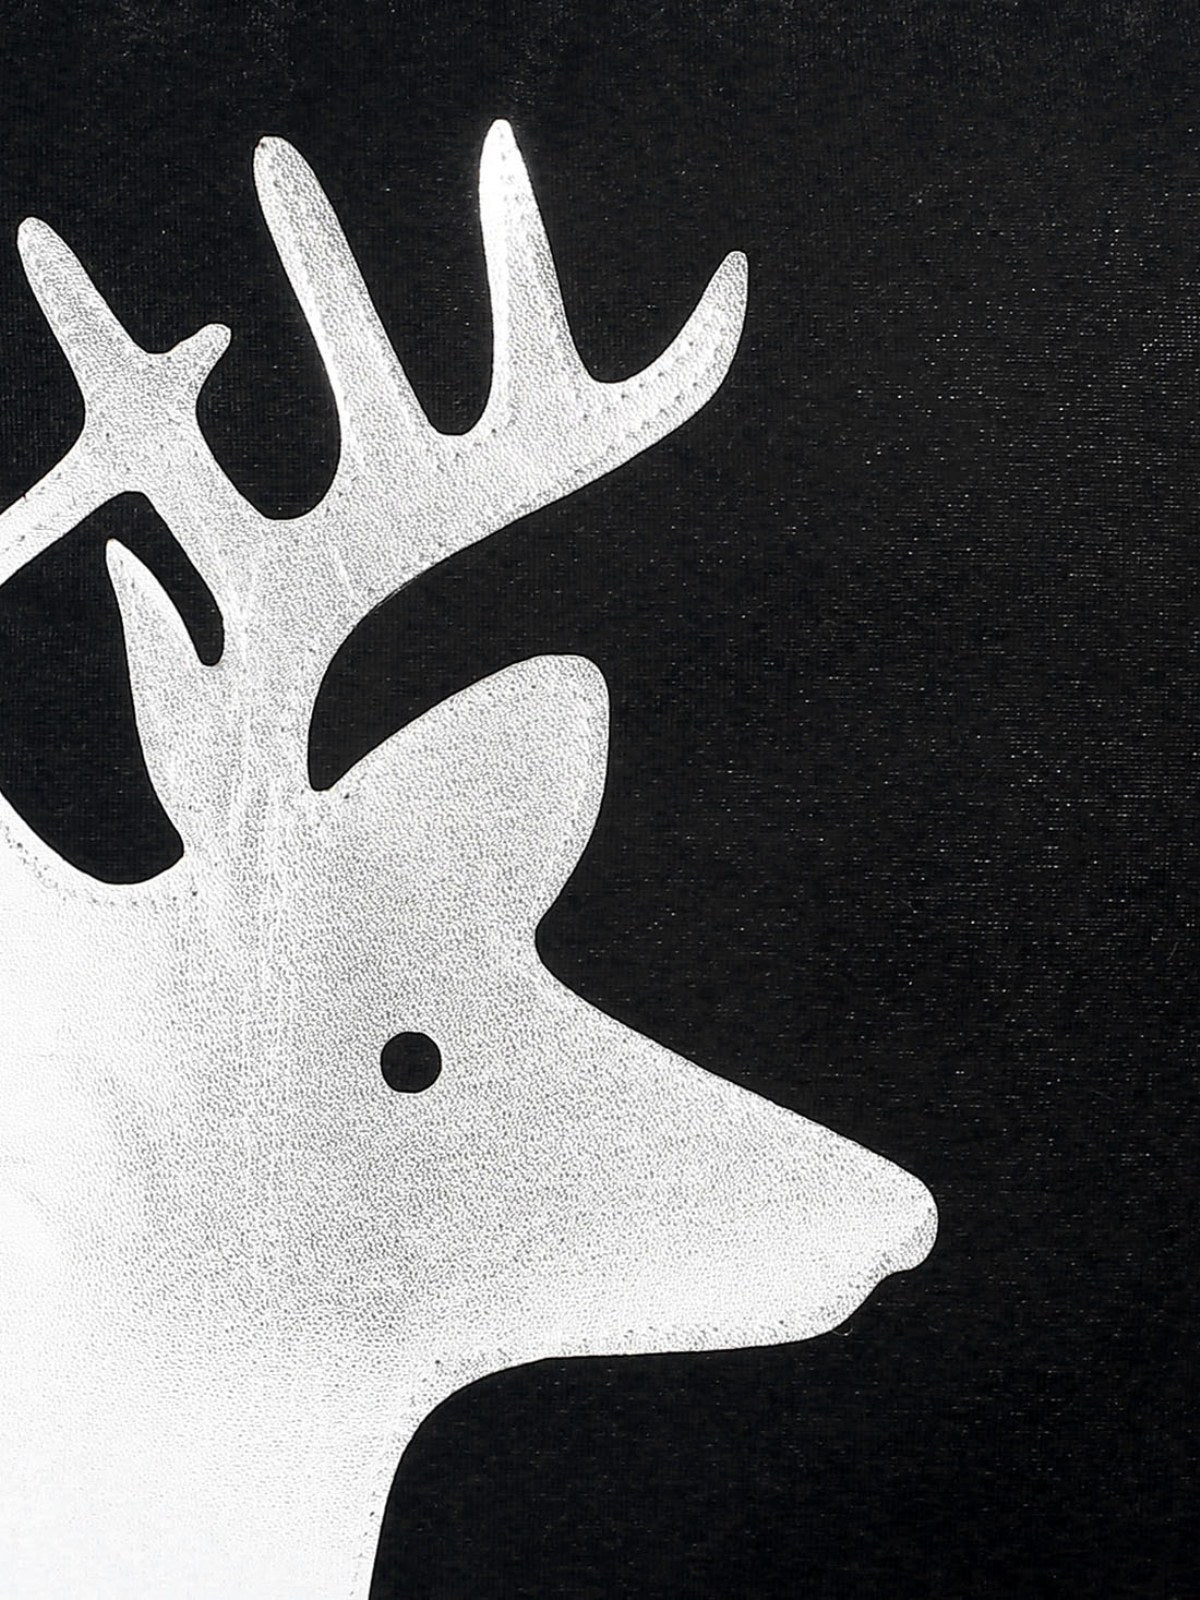 Soft Polyester Velvet Deer Patchwork Designer Cushion Covers 16x16 inches, Set of 5 - Black